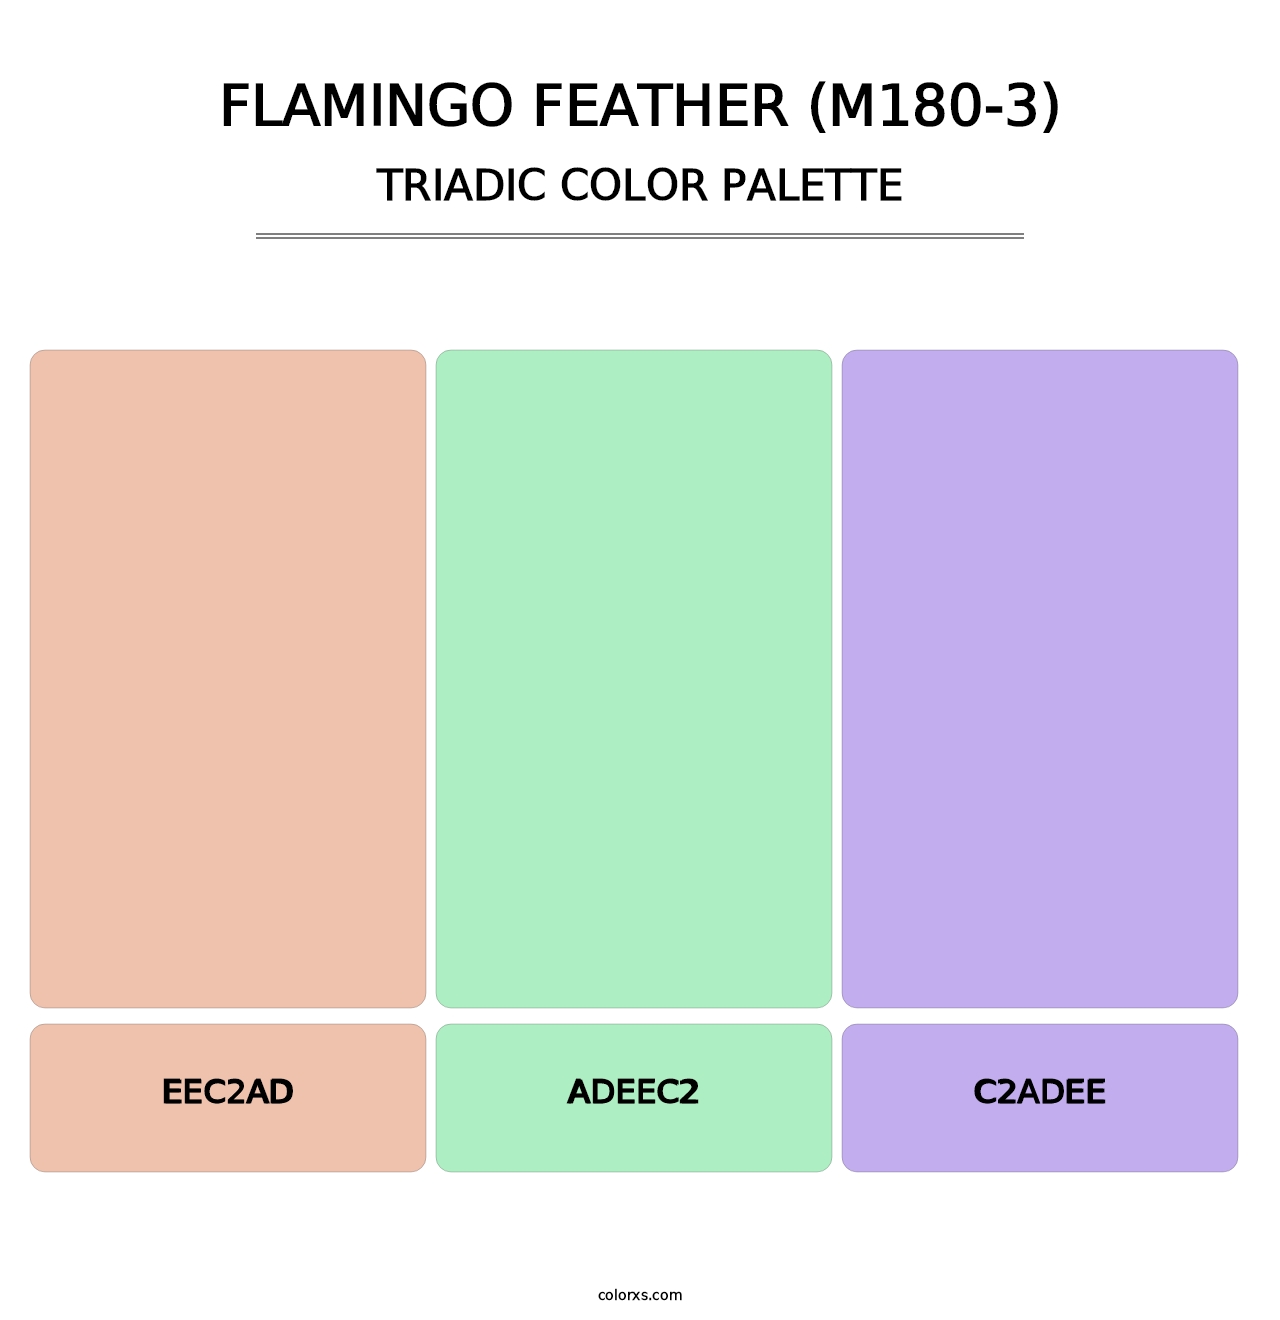 Flamingo Feather (M180-3) - Triadic Color Palette